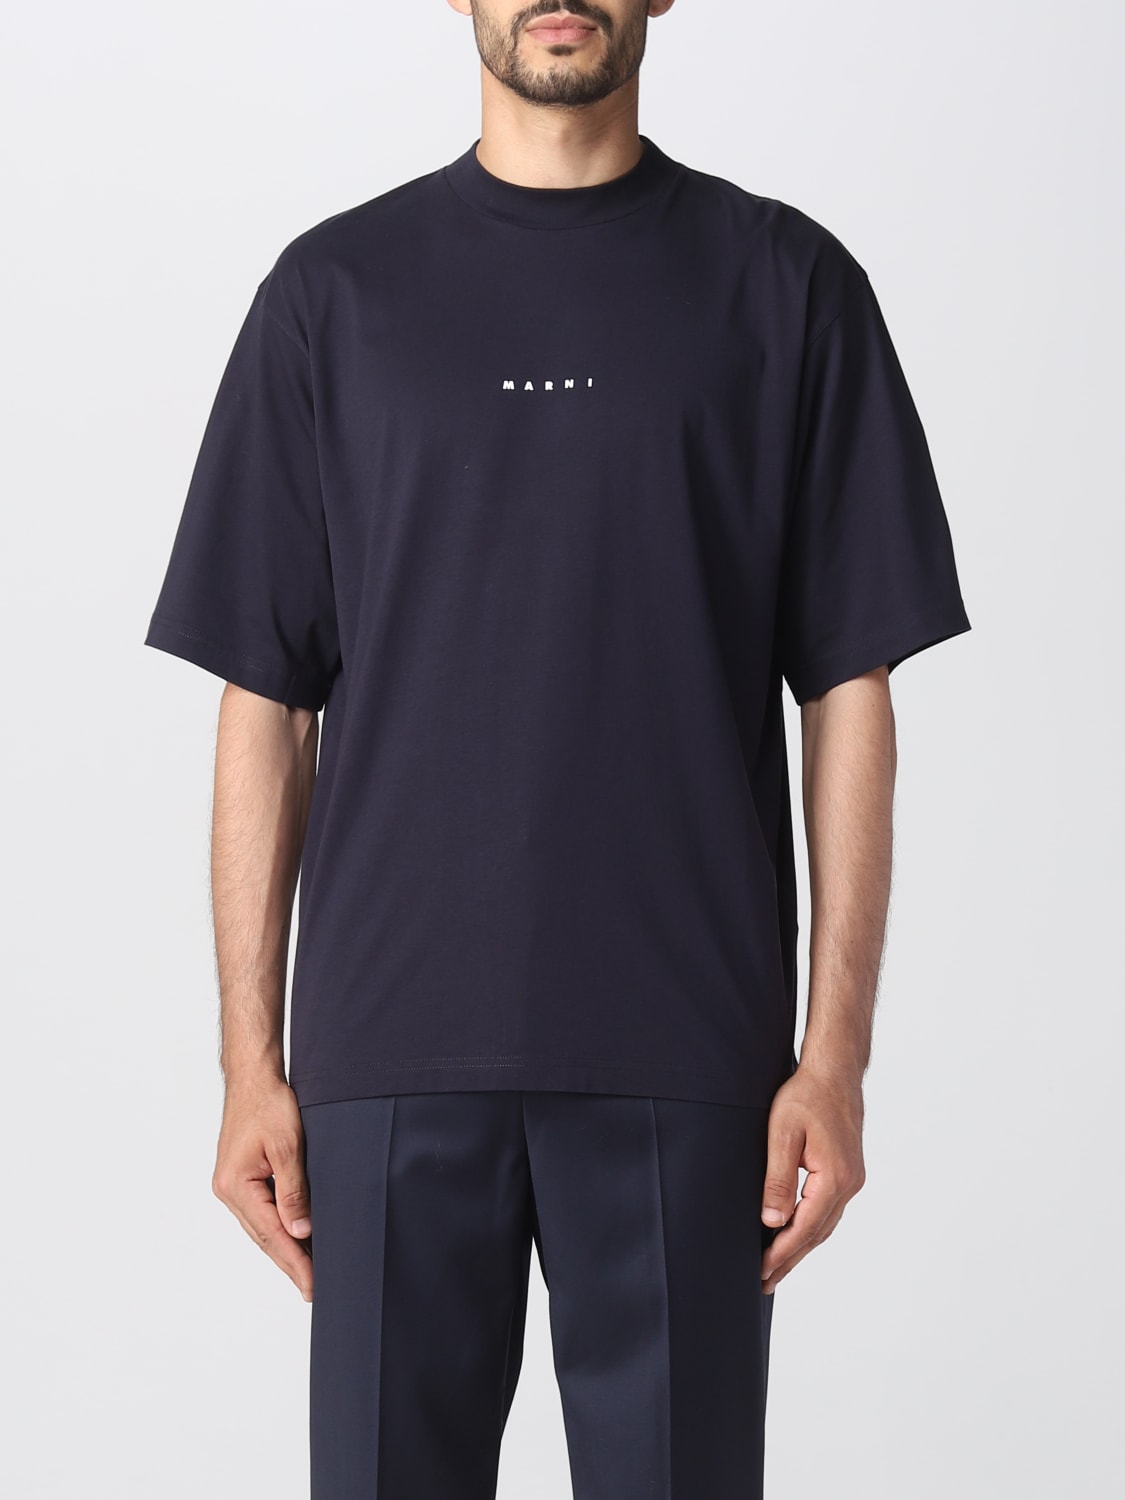 MARNI: cotton t-shirt - Blue | MARNI t-shirt HUMU0223P1USCS87 online at ...